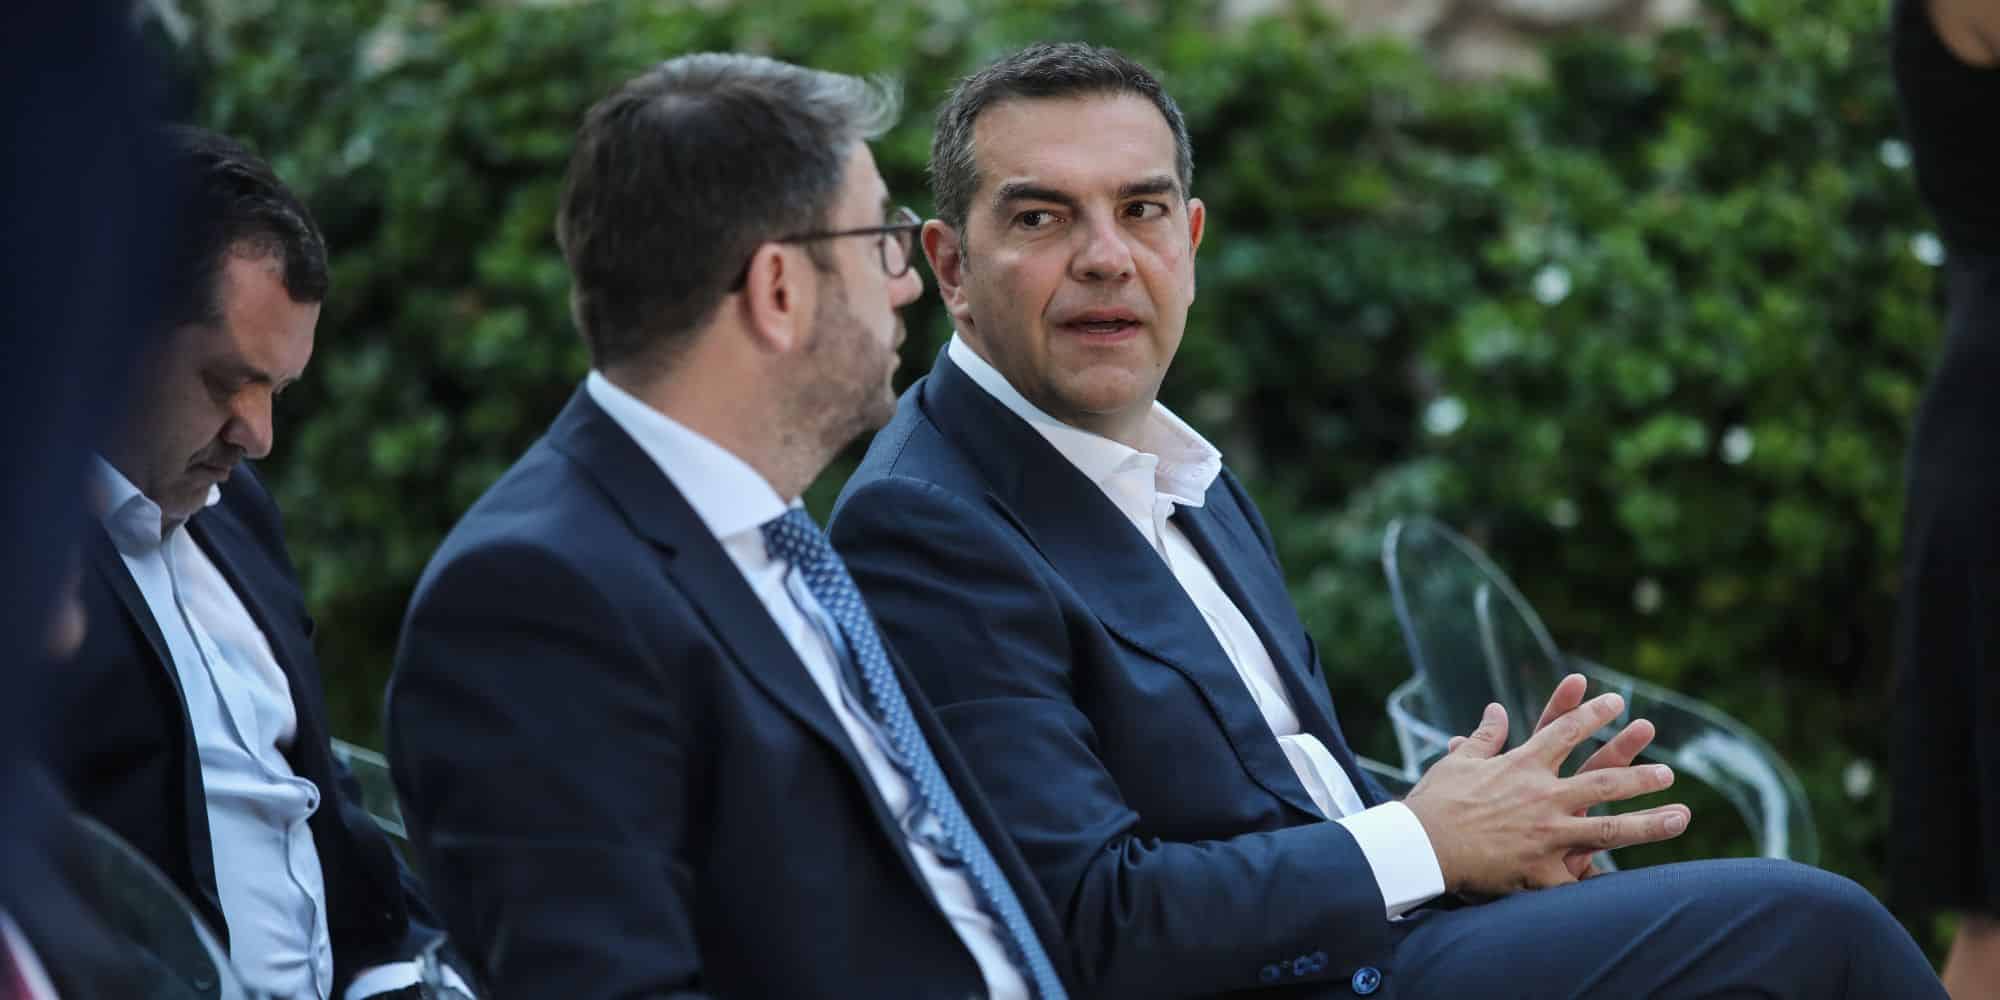 Nikos Androulakis Alexis Tsipras 9 9 22 - Η Εξεταστική Επιτροπή για τις υποκλοπές φέρνει ακόμα πιο κοντά ΣΥΡΙΖΑ και ΠΑΣΟΚ